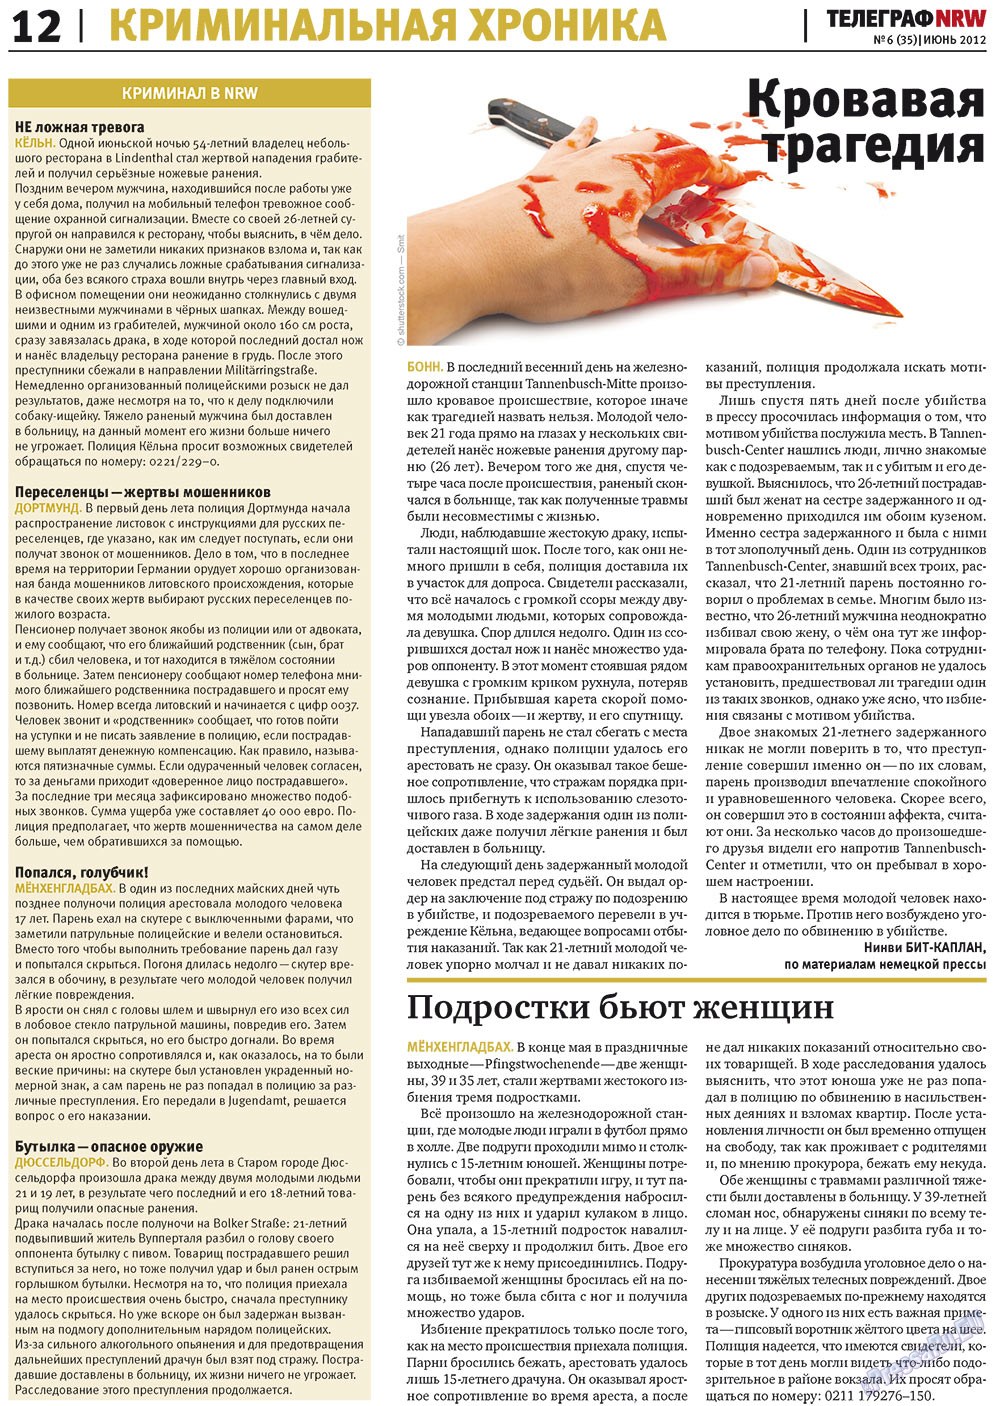 Телеграф NRW, газета. 2012 №6 стр.12